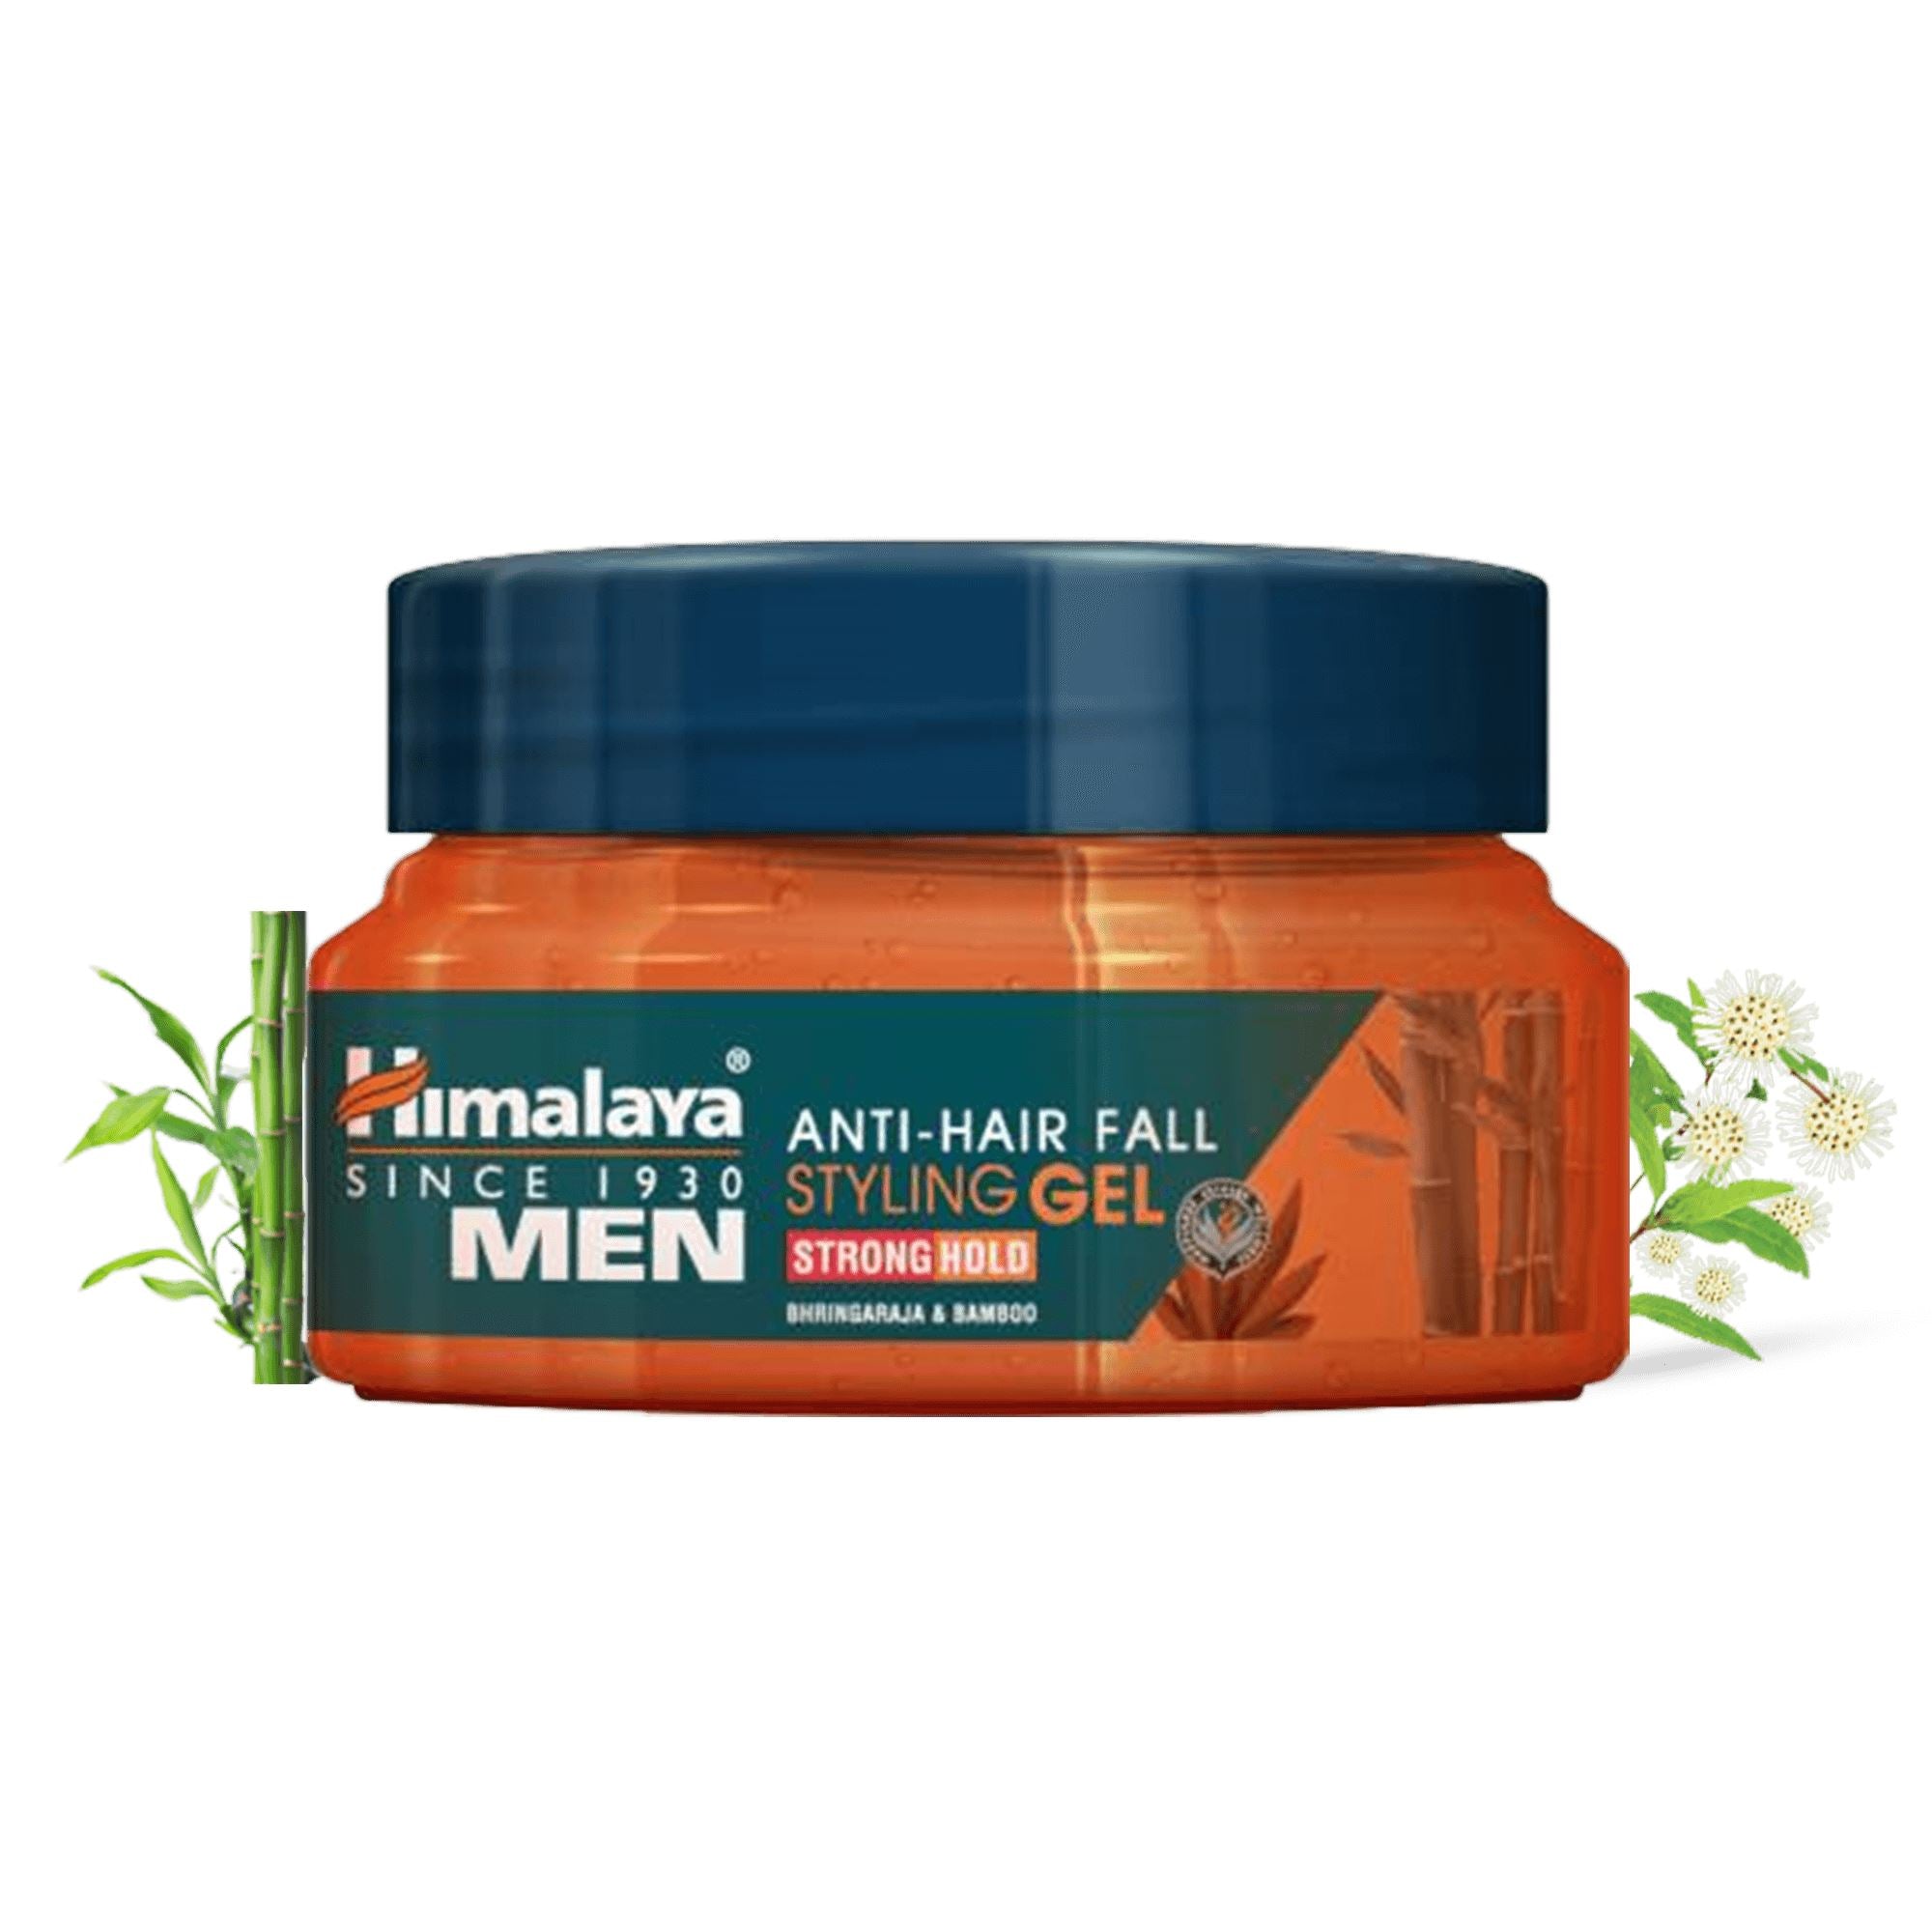 Himalaya Men Anti-Hair Fall Styling Gel 250ml - Strong Hold